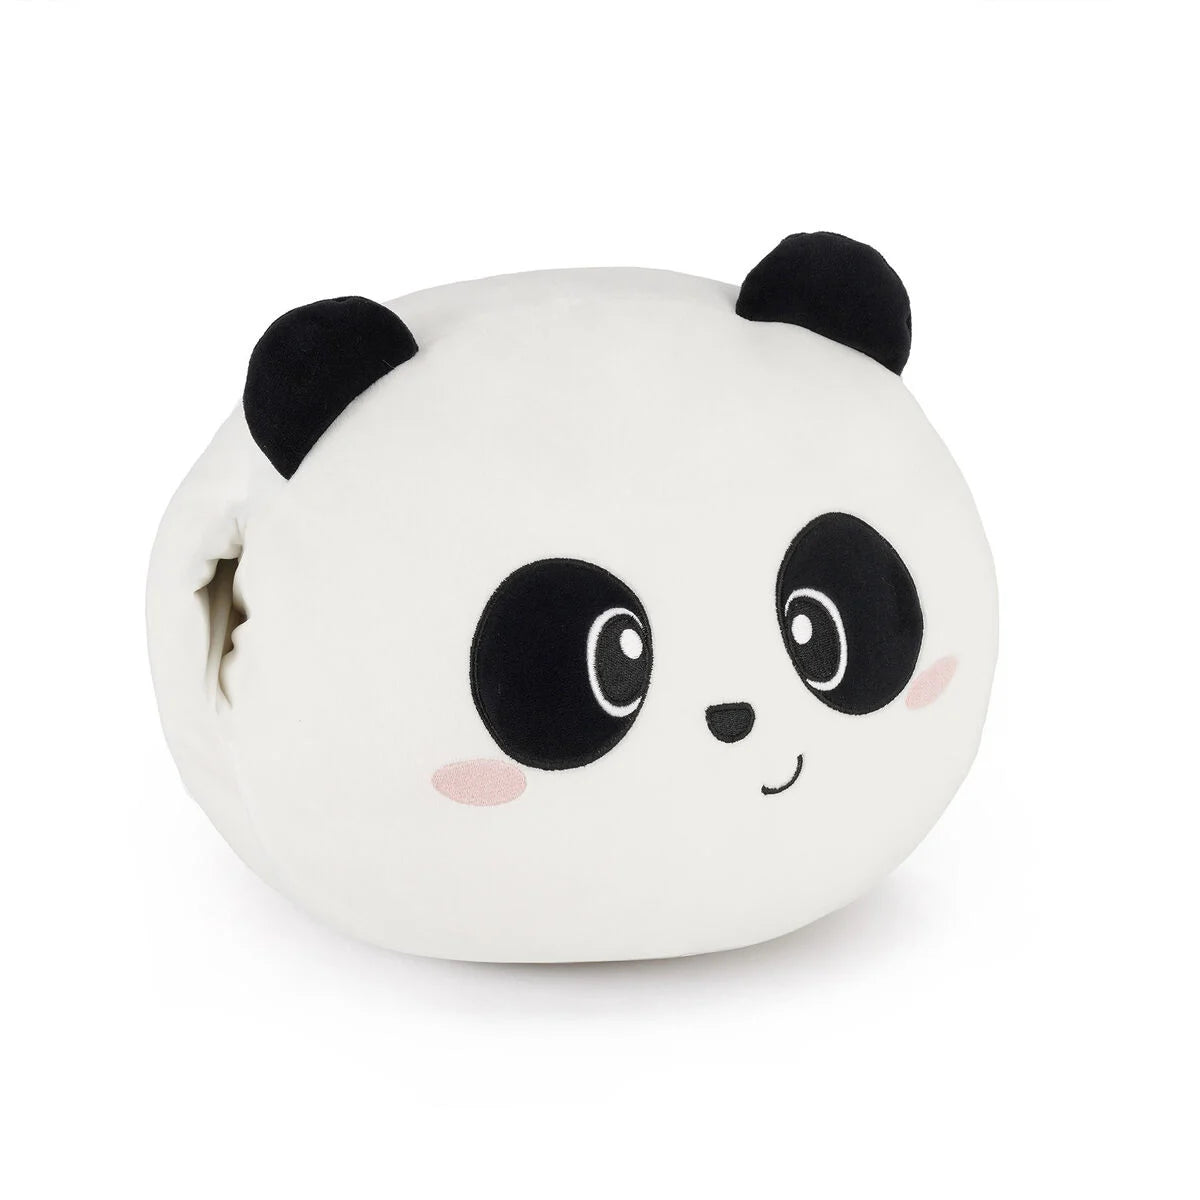 Fab Gifts | Legami Super Soft Pillow Panda by Weirs of Baggot Street